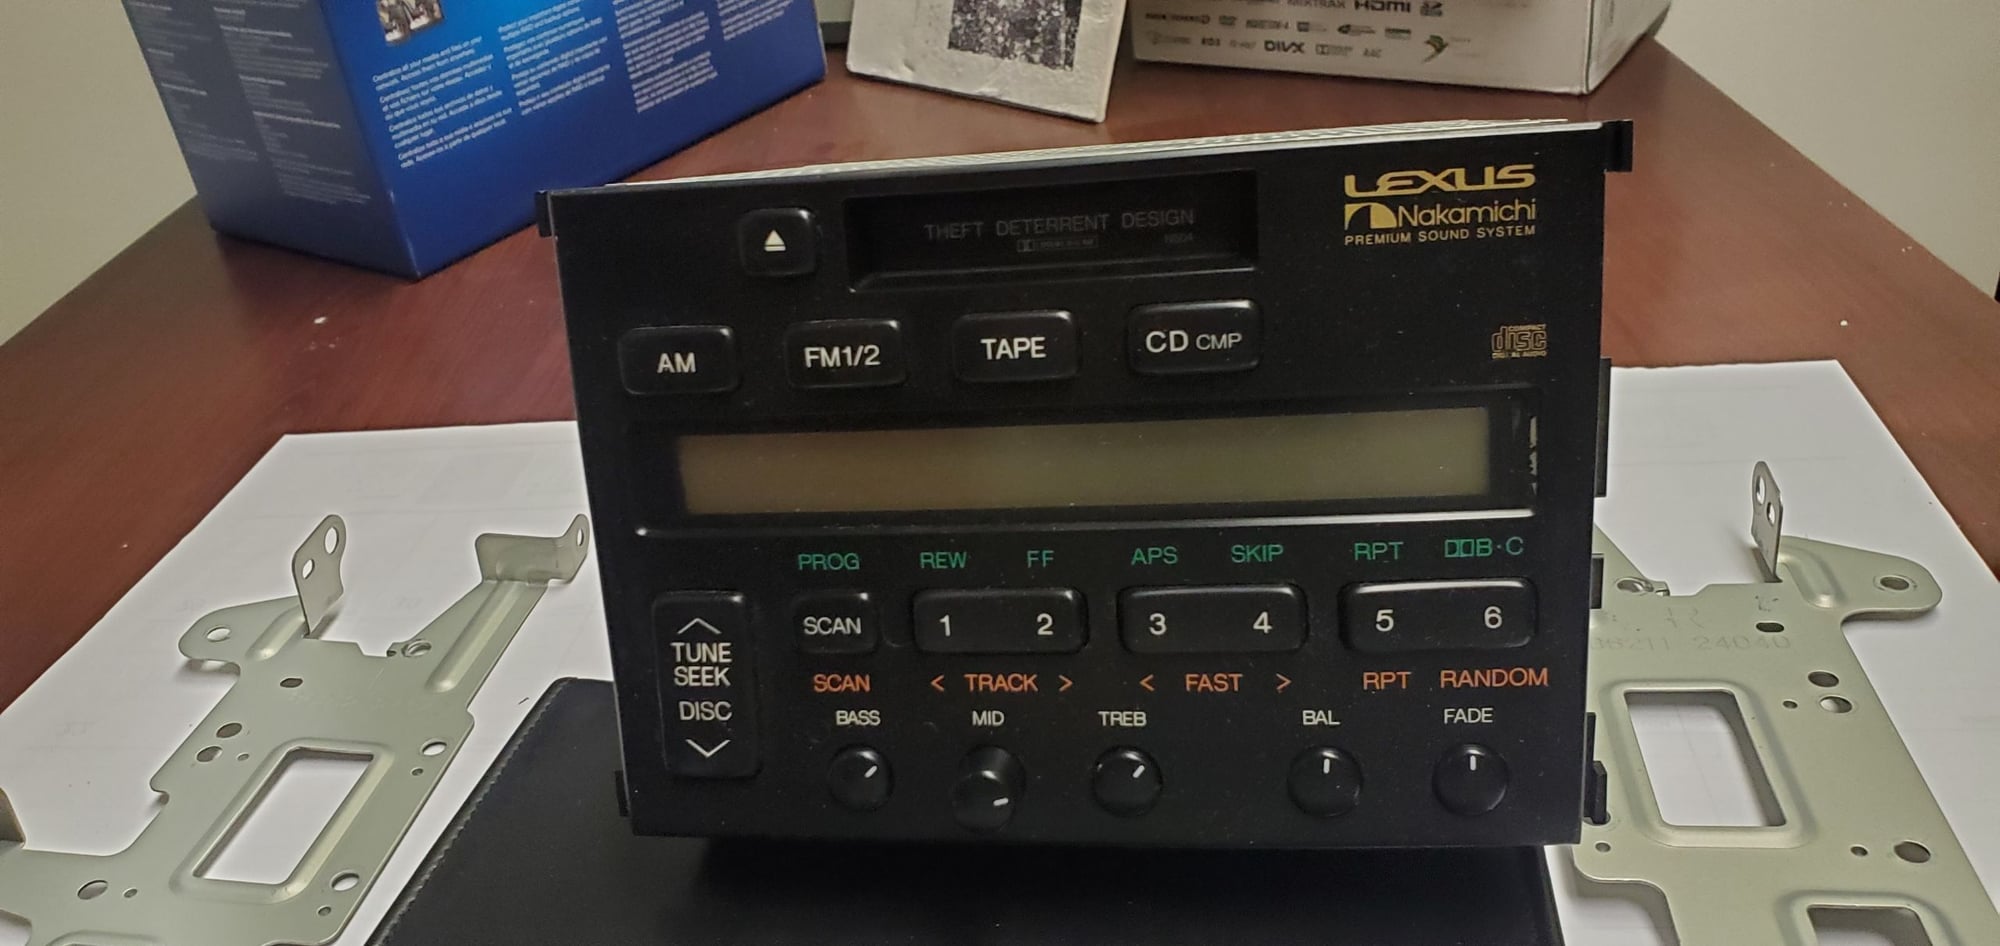 Audio Video/Electronics - Nakamichi Premium Sound System - Used - 1995 Lexus SC400 - Houston, TX 77043, United States